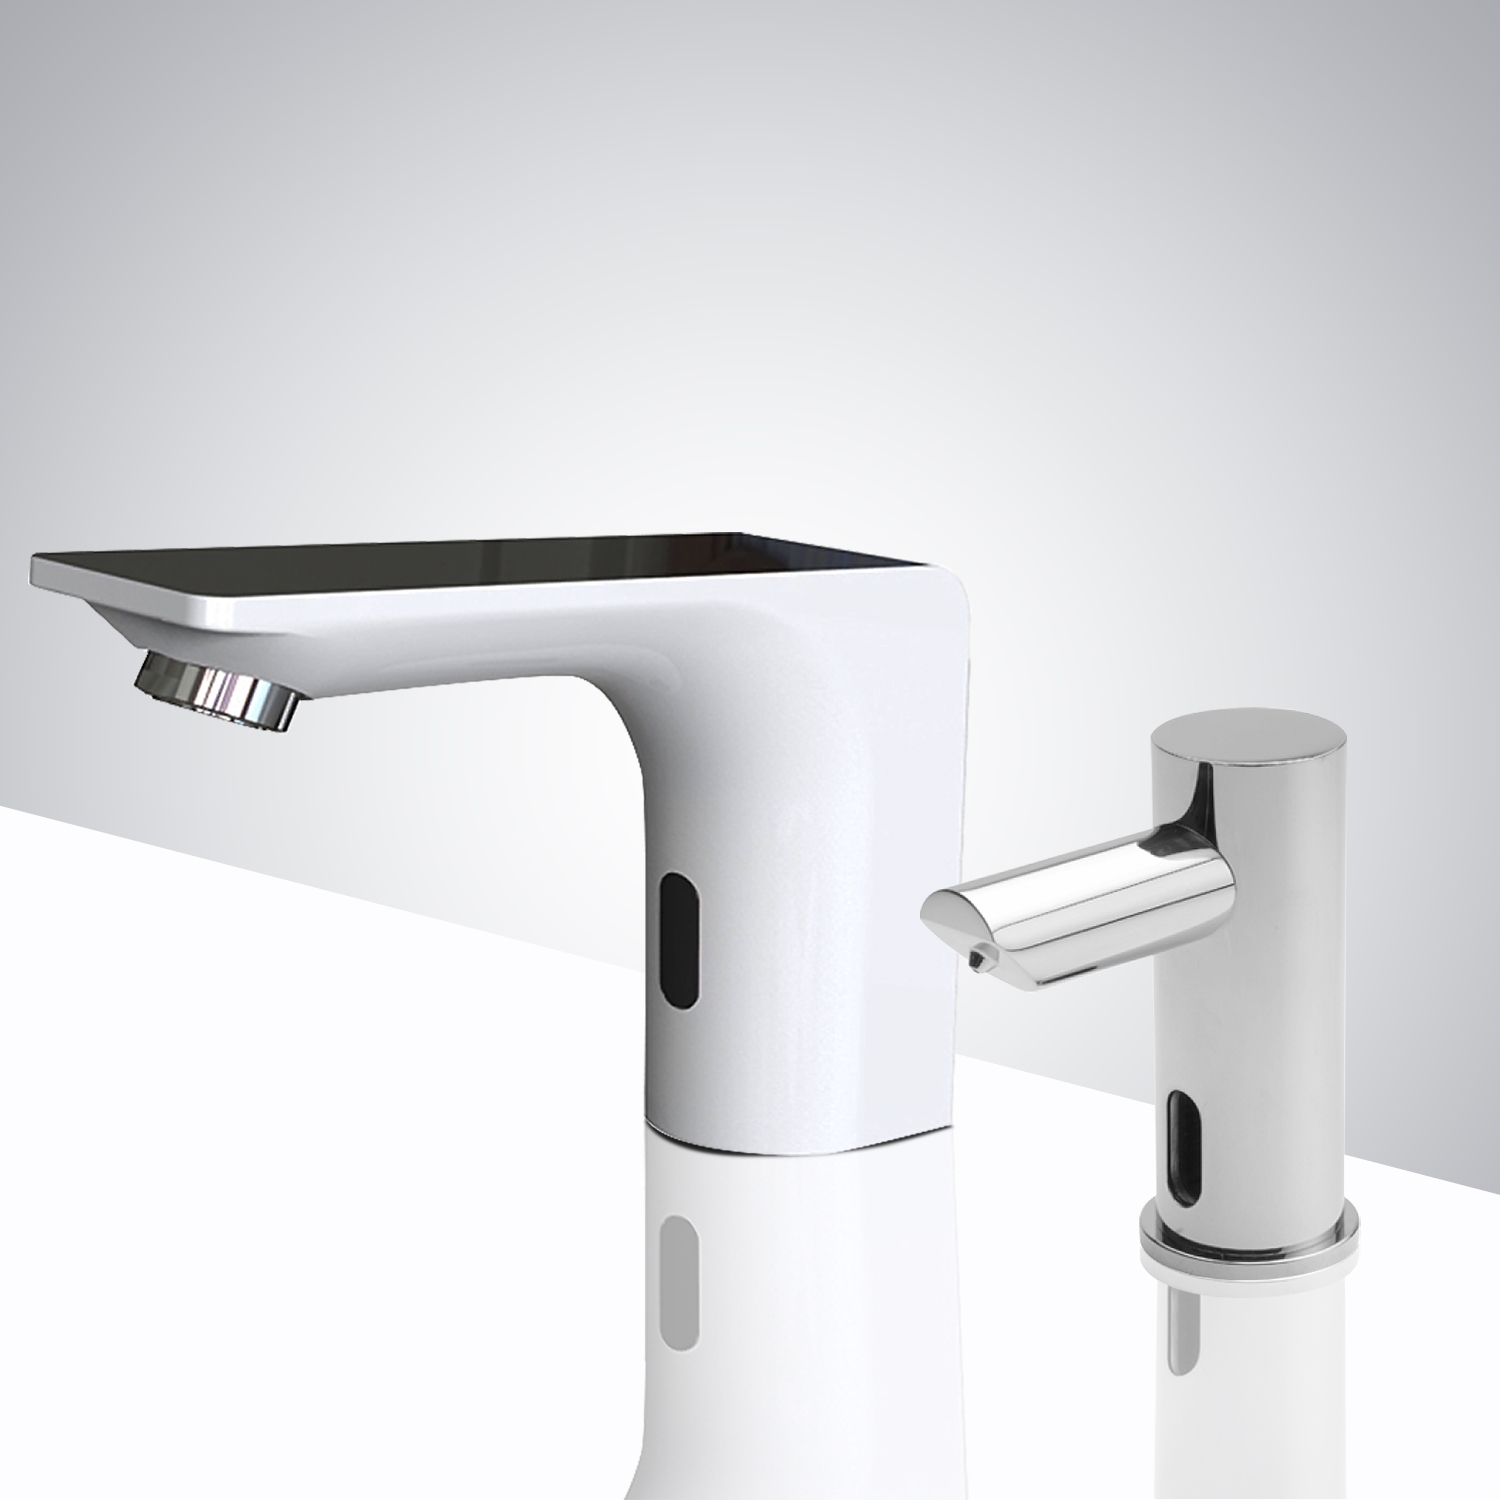 Fontana Valence Electronic Automatic Motion Sensor Faucet & Automatic Liquid Soap Dispenser for Restrooms